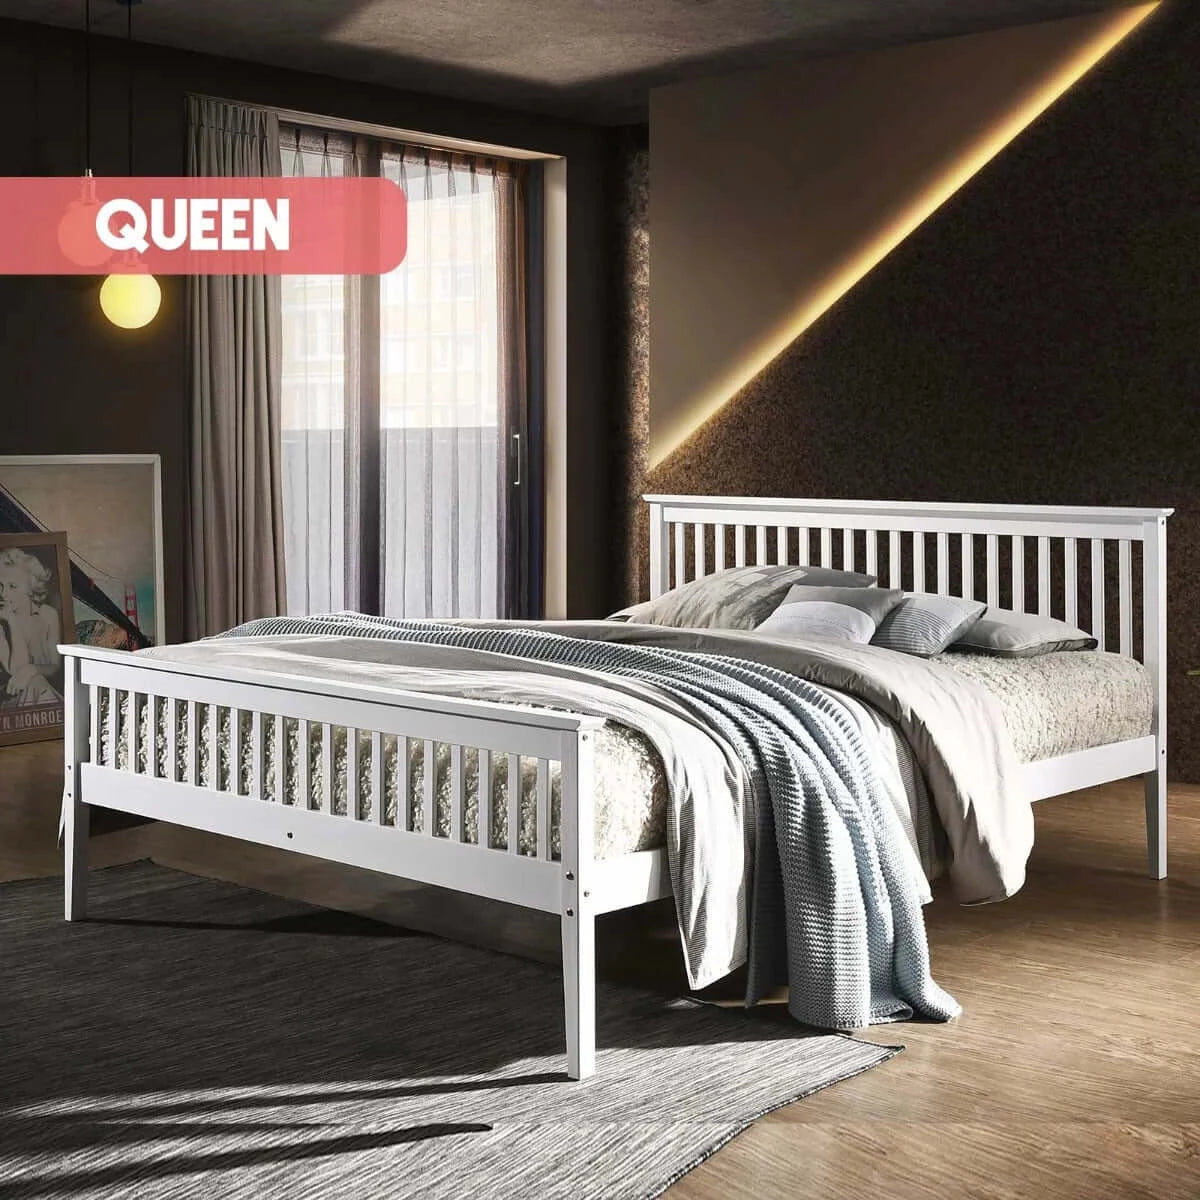 Buy wooden bed frame white - queen - upinteriors-Upinteriors